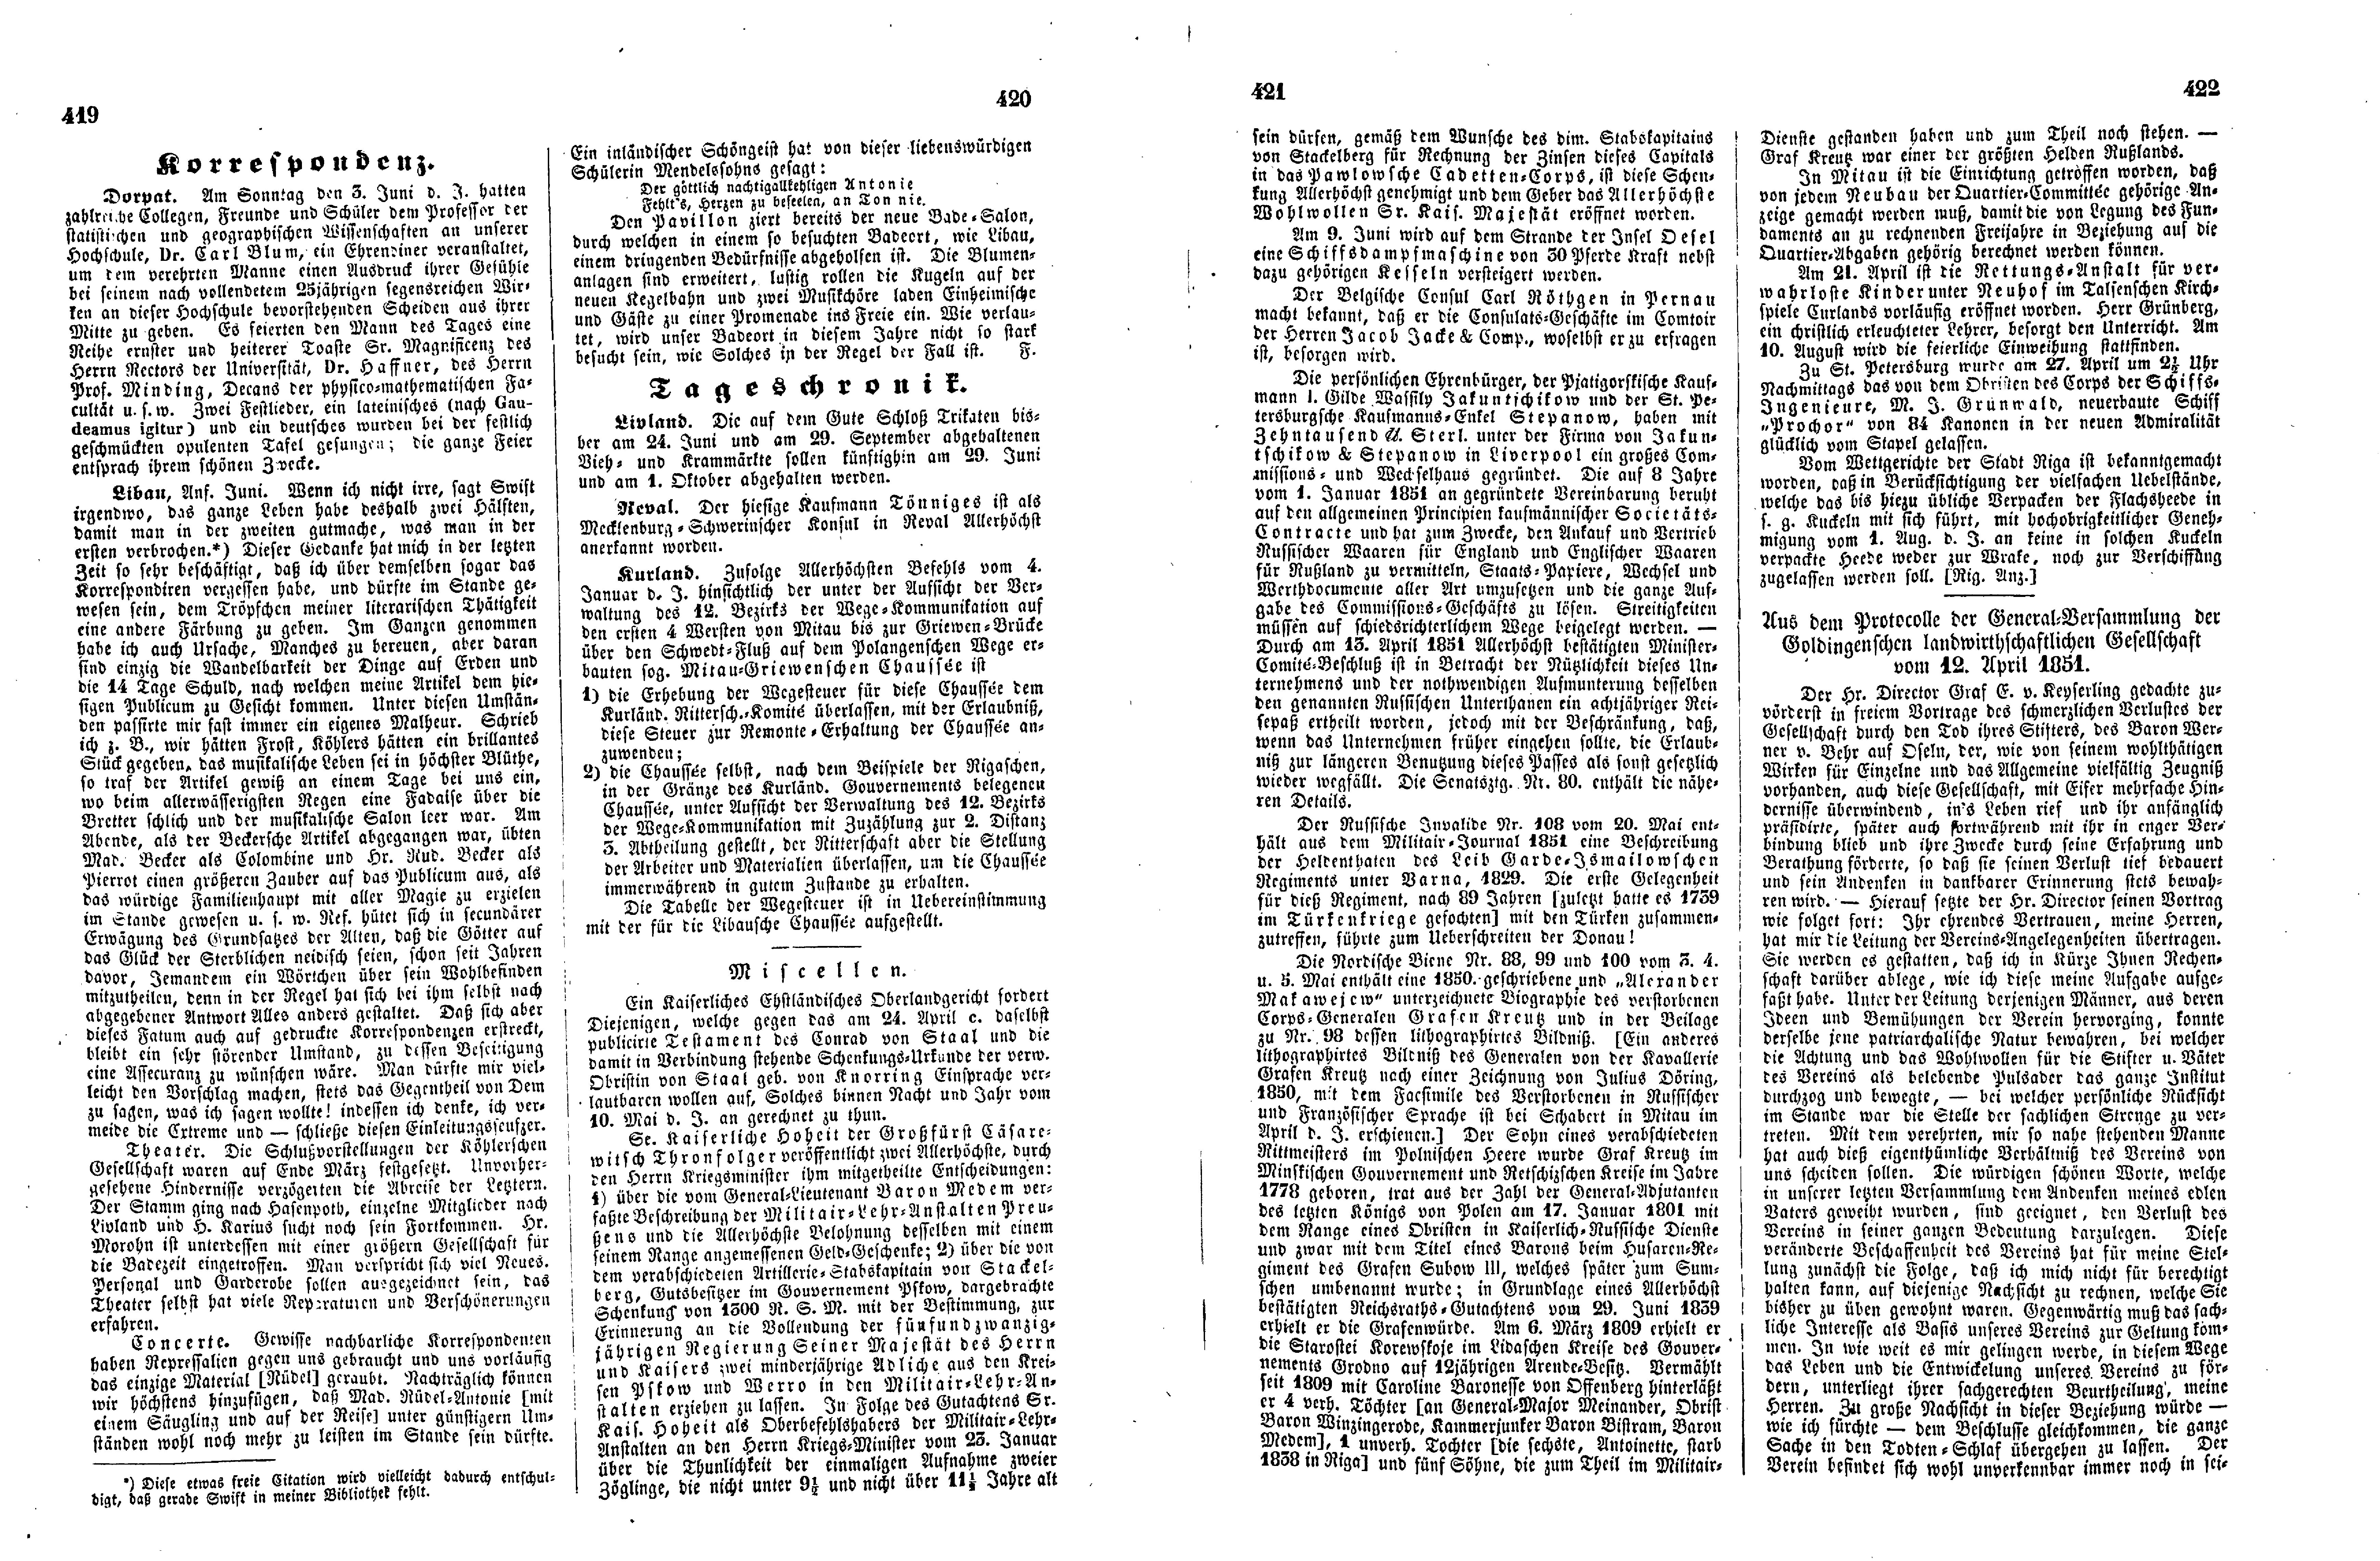 Das Inland [16] (1851) | 109. (419-422) Main body of text